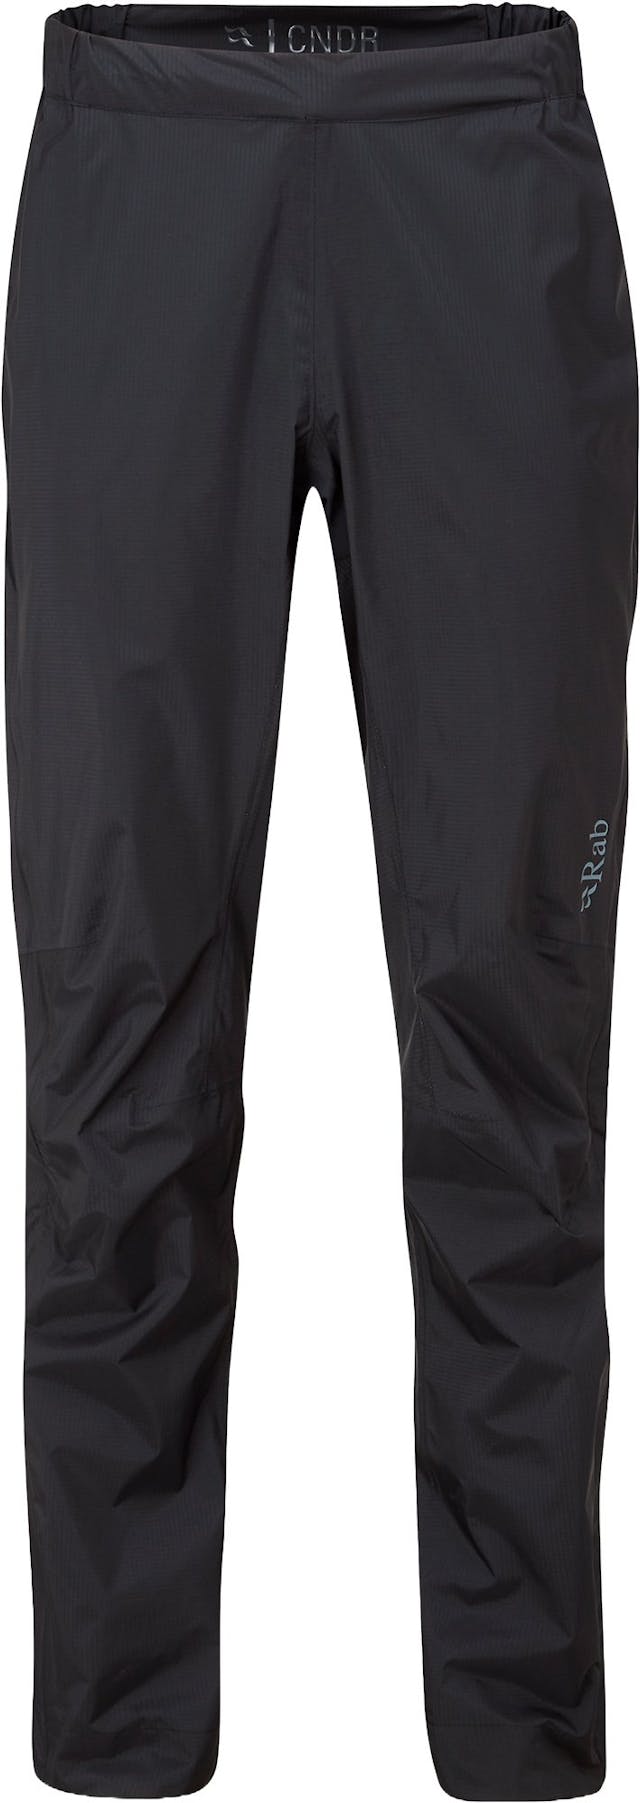 Product image for Cinder Downpour Waterproof Pant - Men's